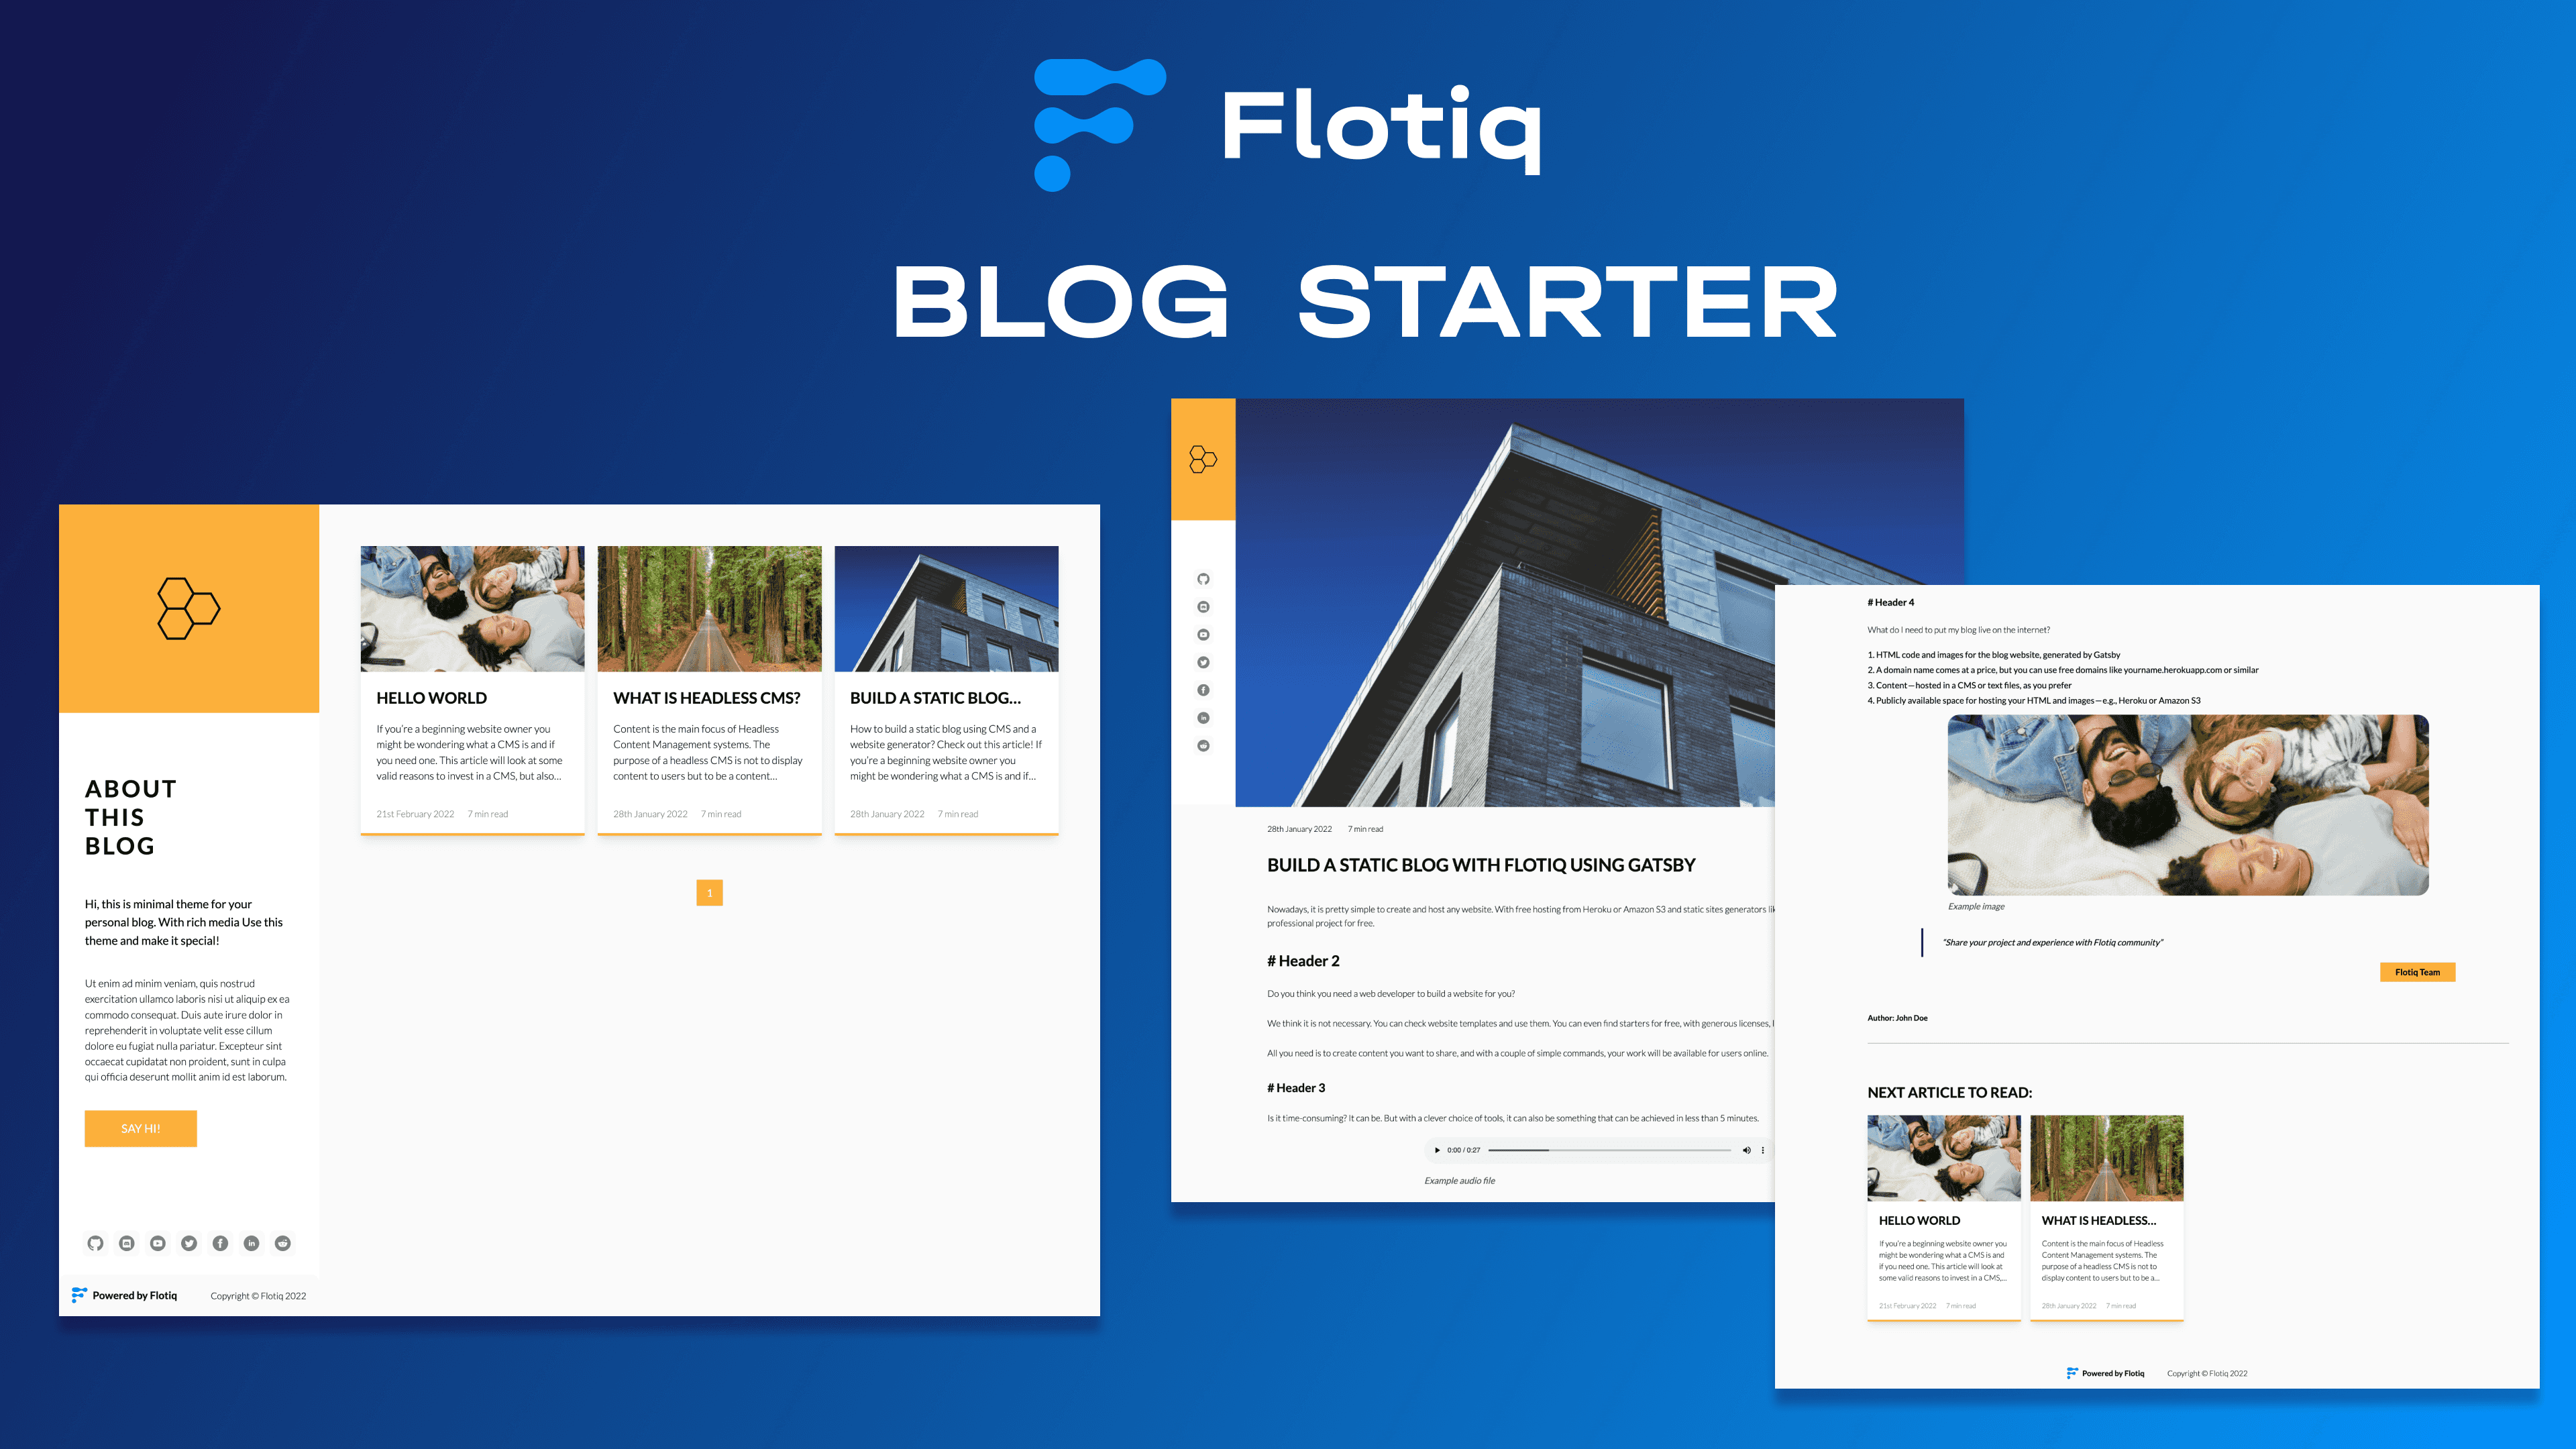 Building Flotiq blog with Gatsby Starter